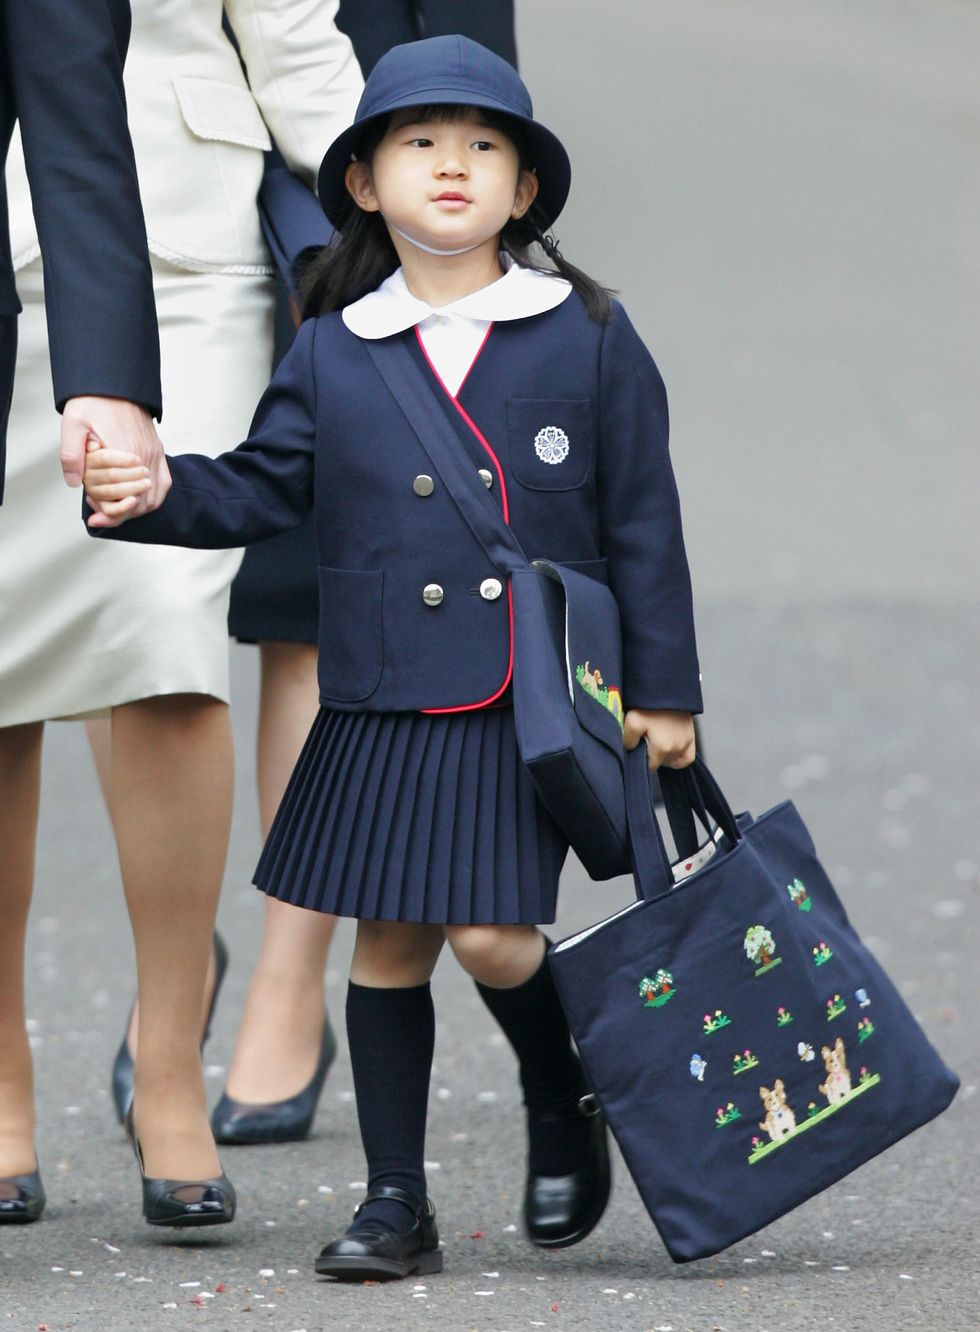 a young girl in a uniform holding an umbrella